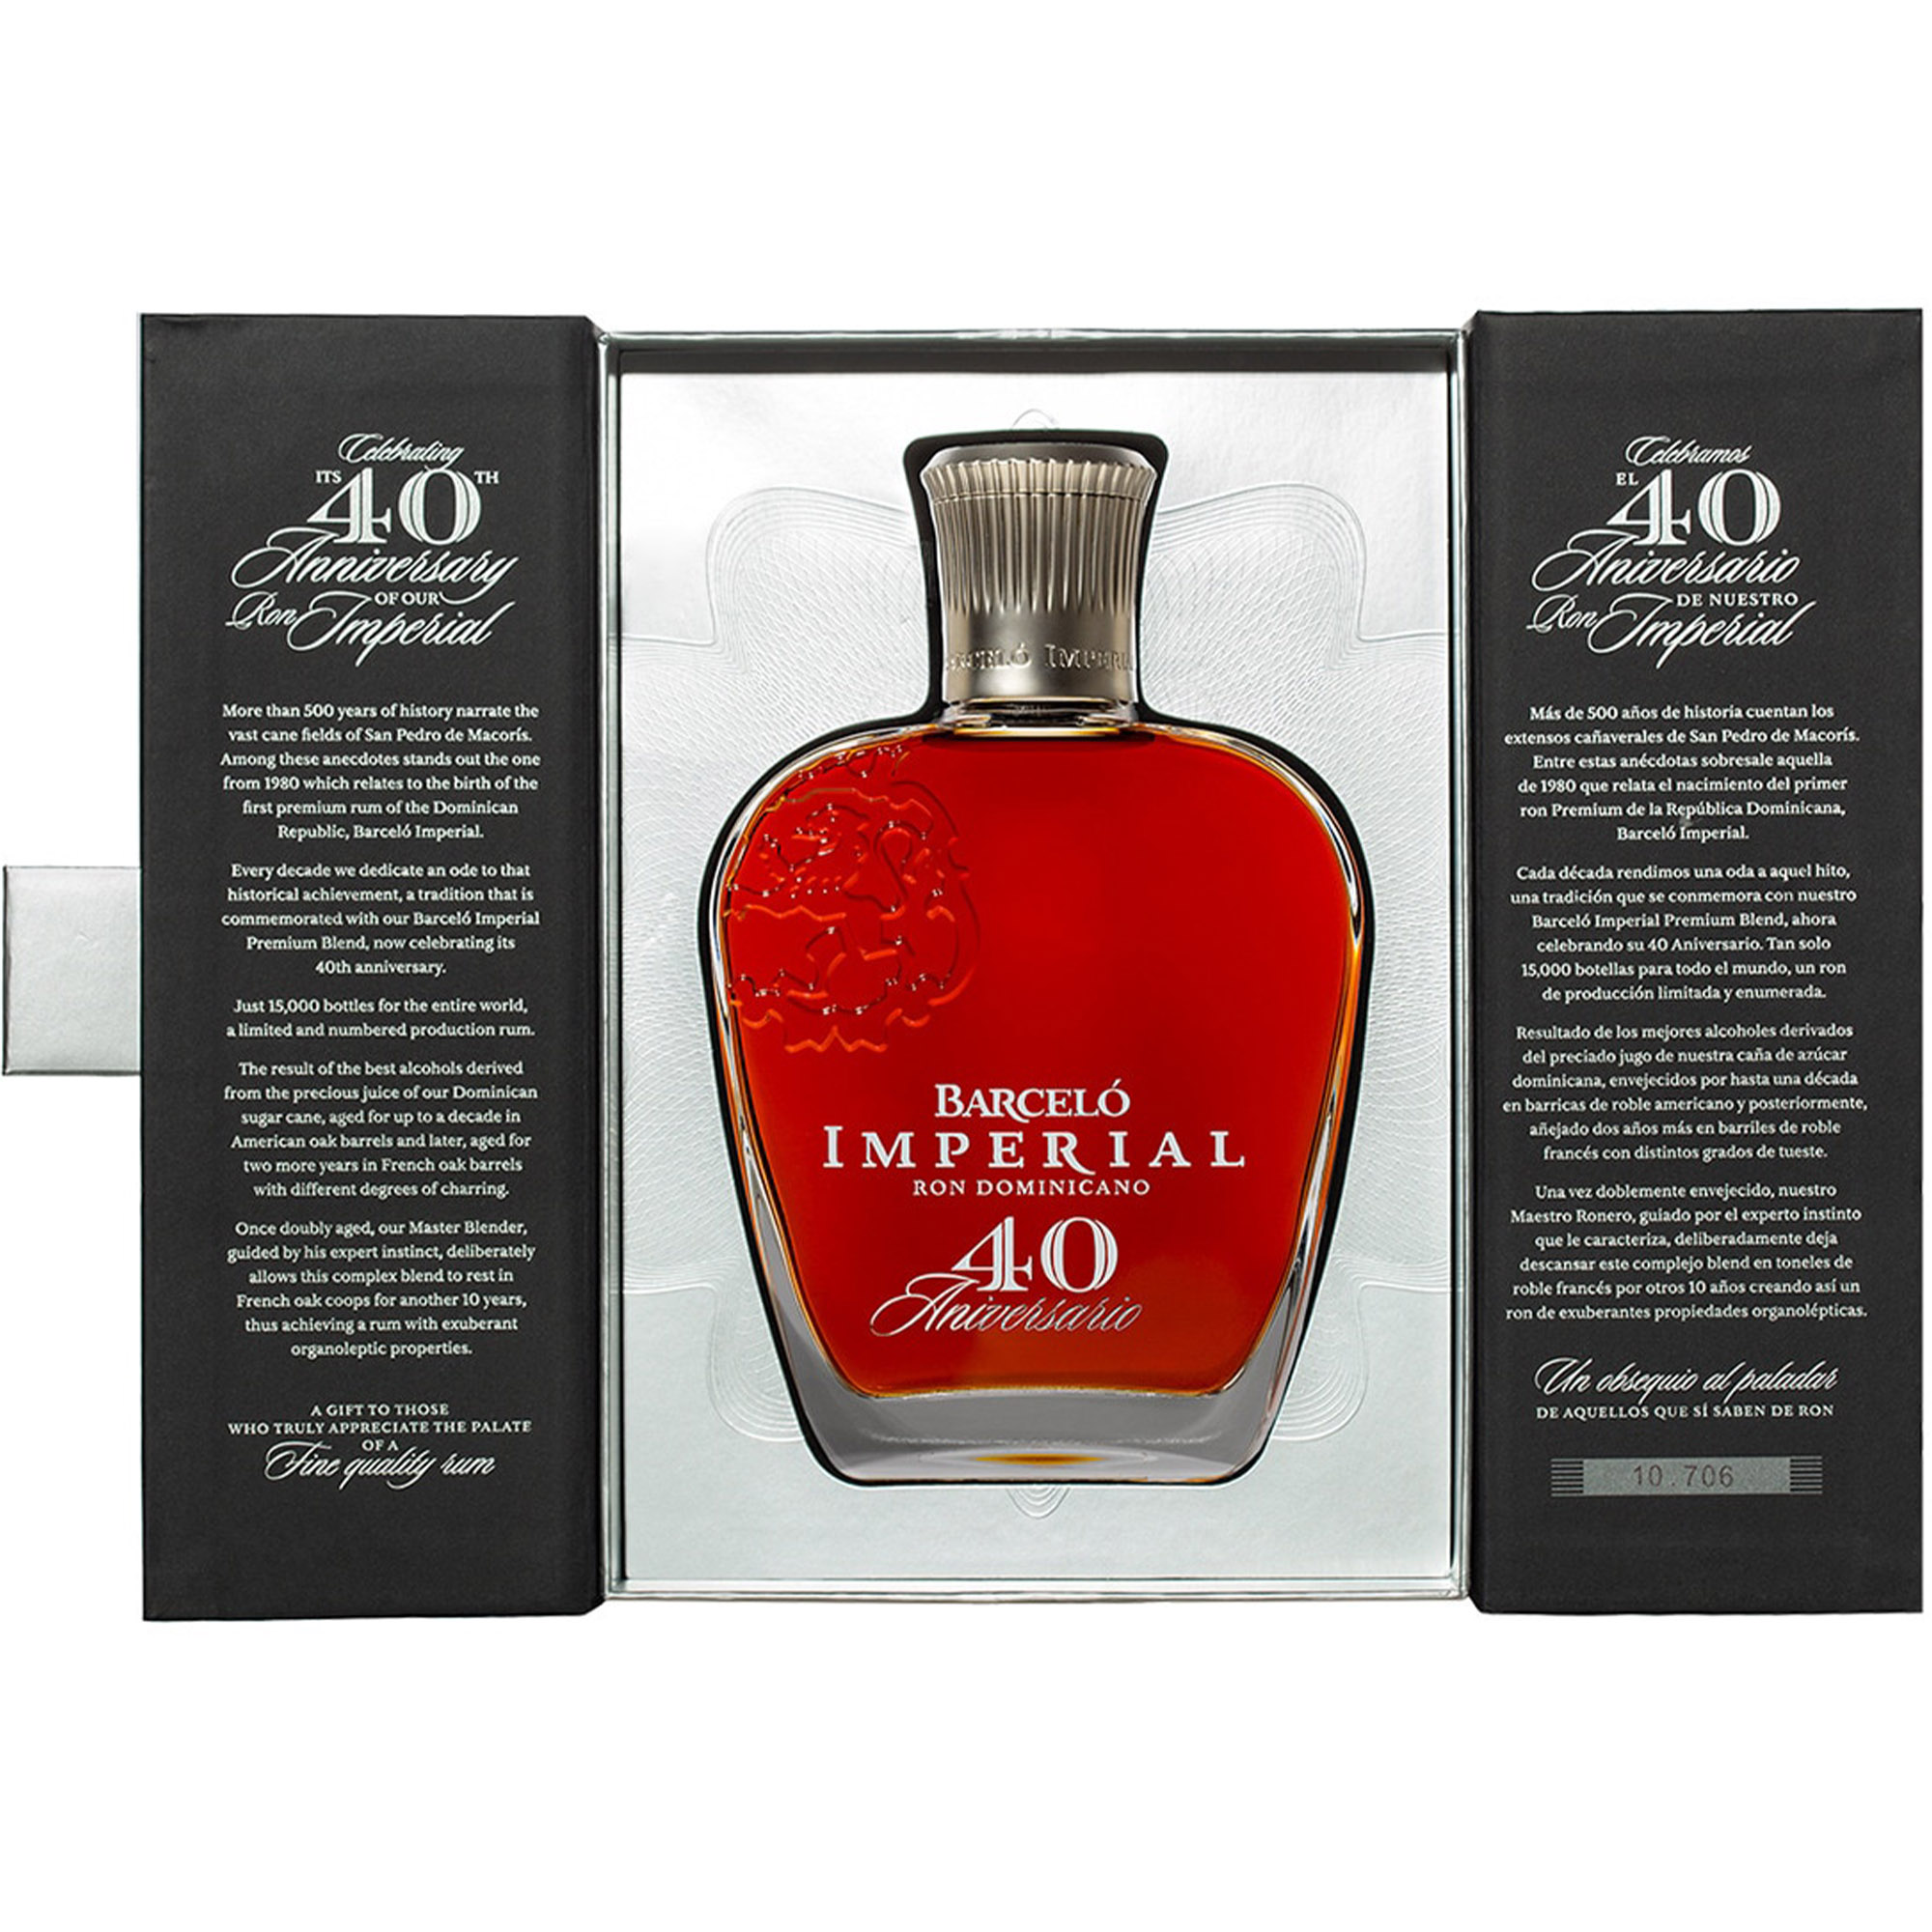 Ром Barcelo Imperial Premium Blend 40 Aniversario 43% 0.7 л в подарочной упаковке - фото 3